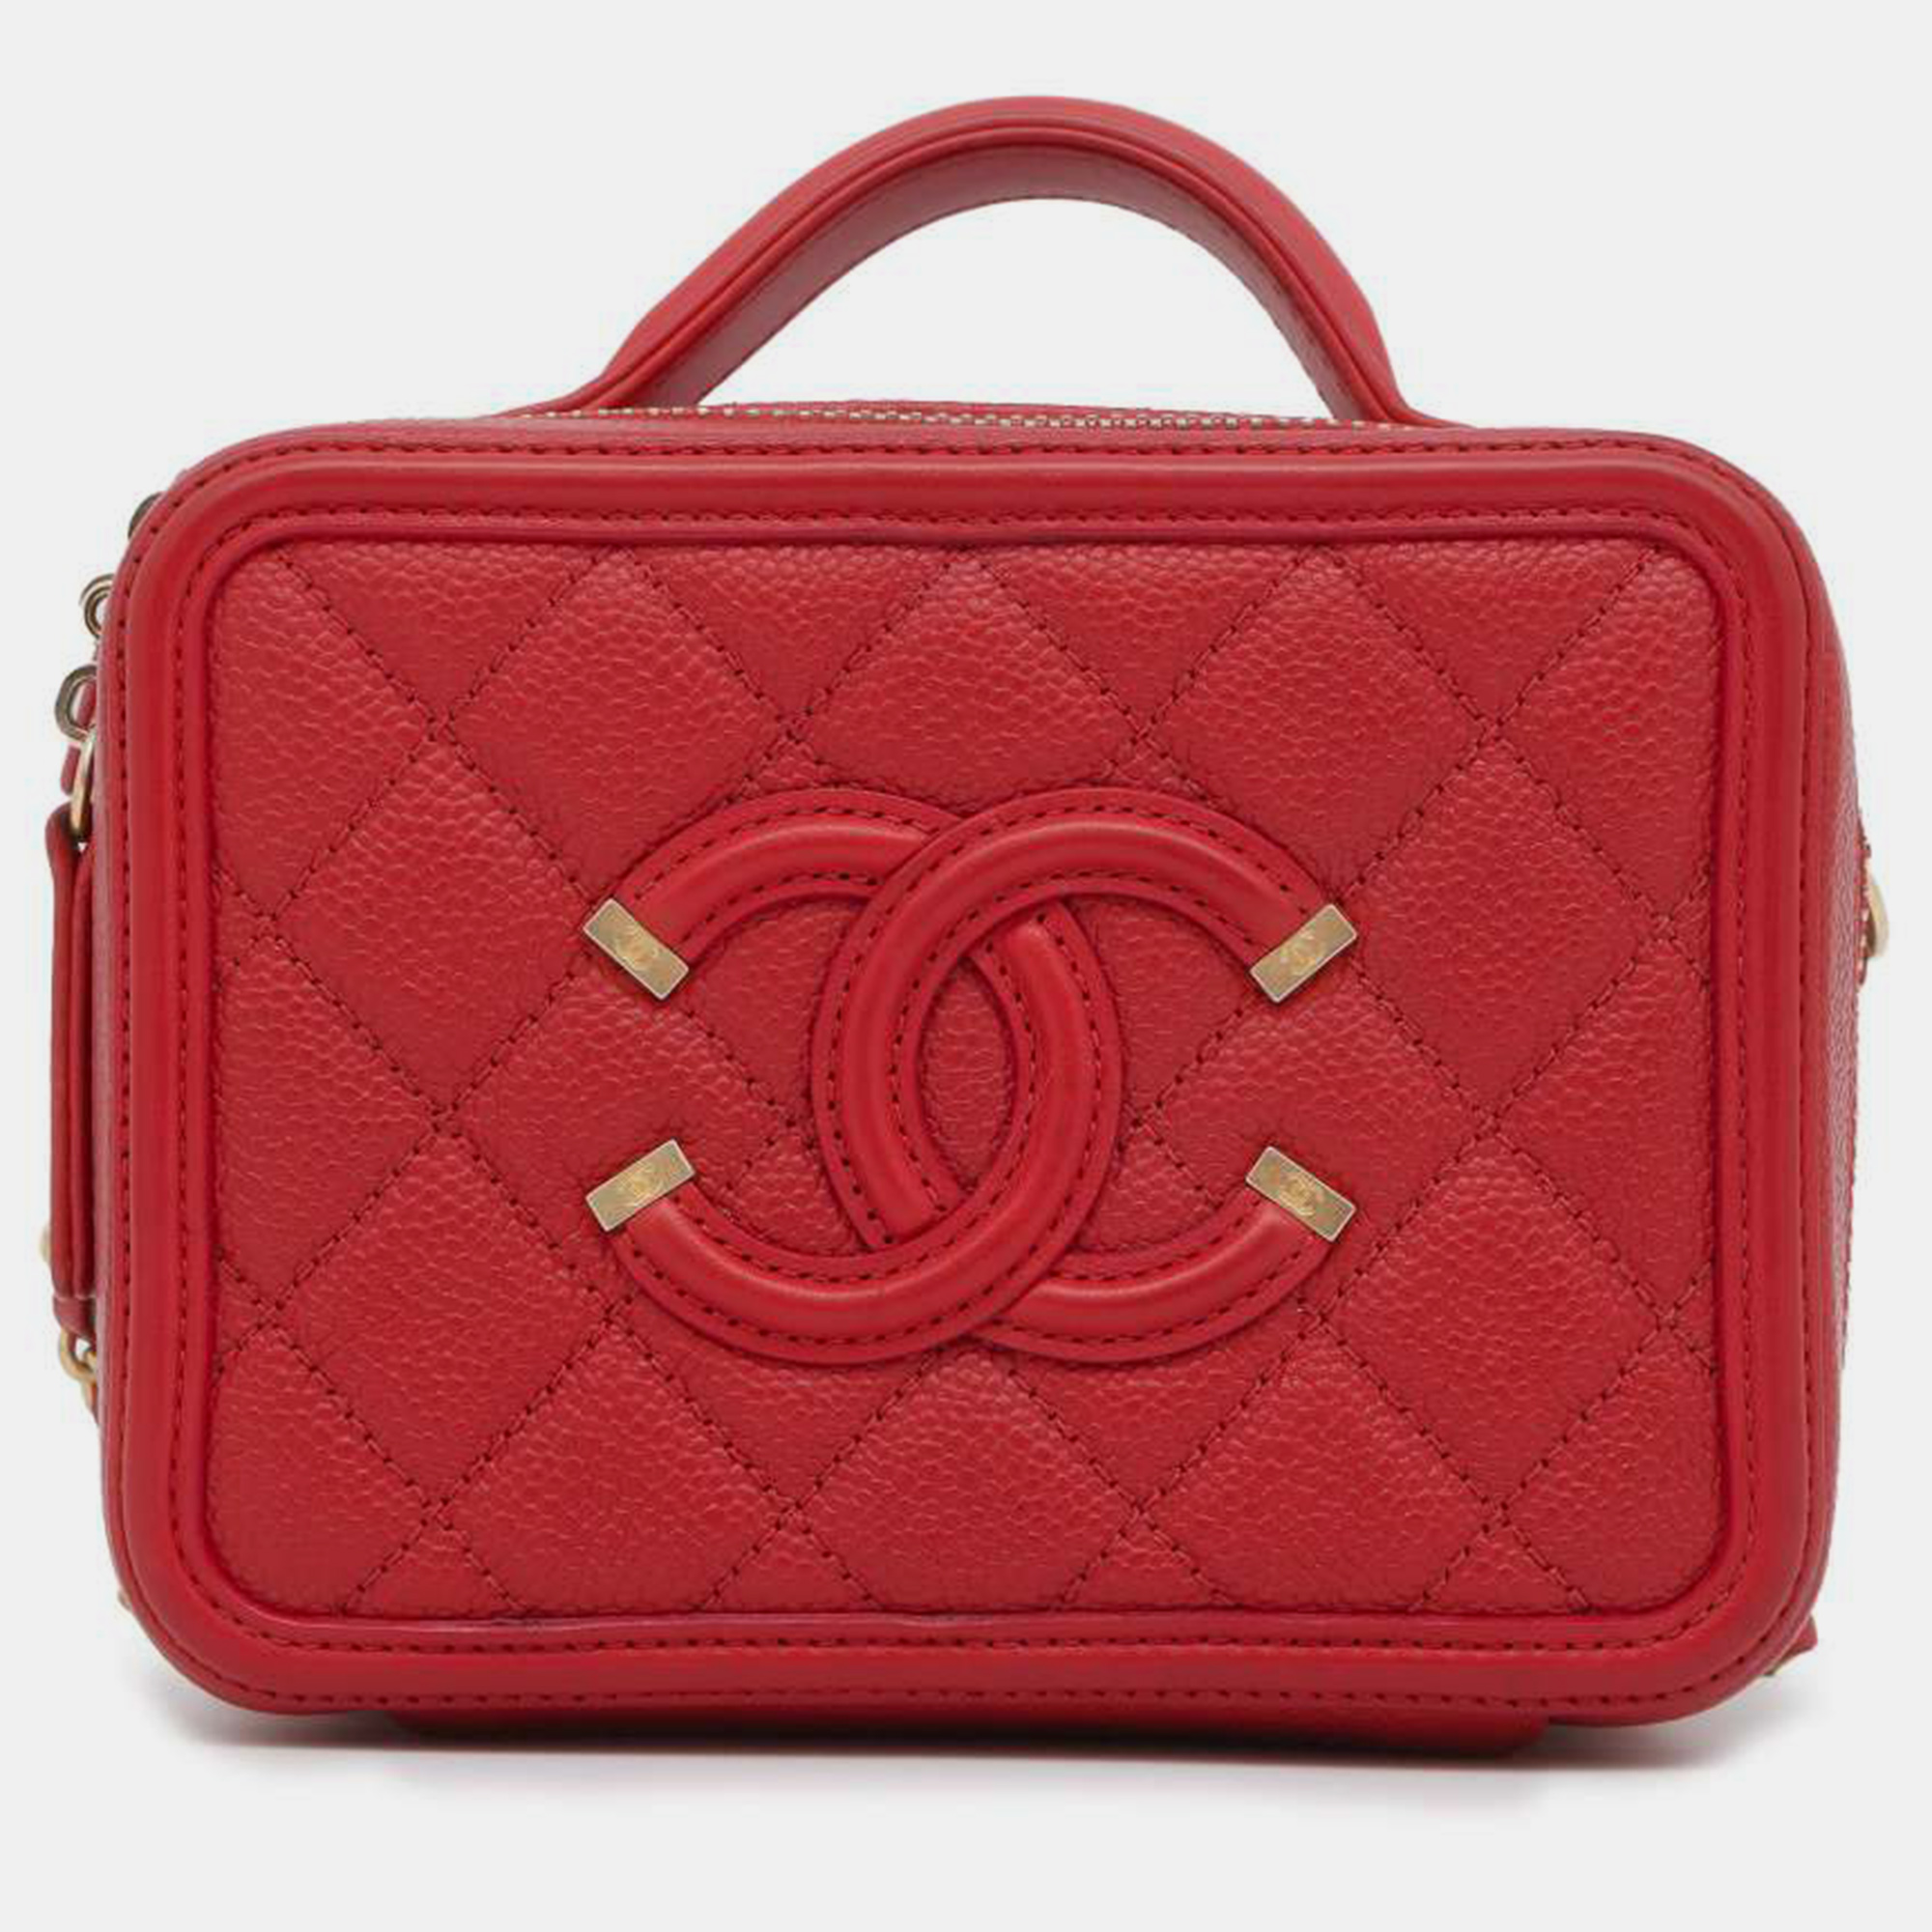 Chanel red caviar leather cc filigree vanity bag